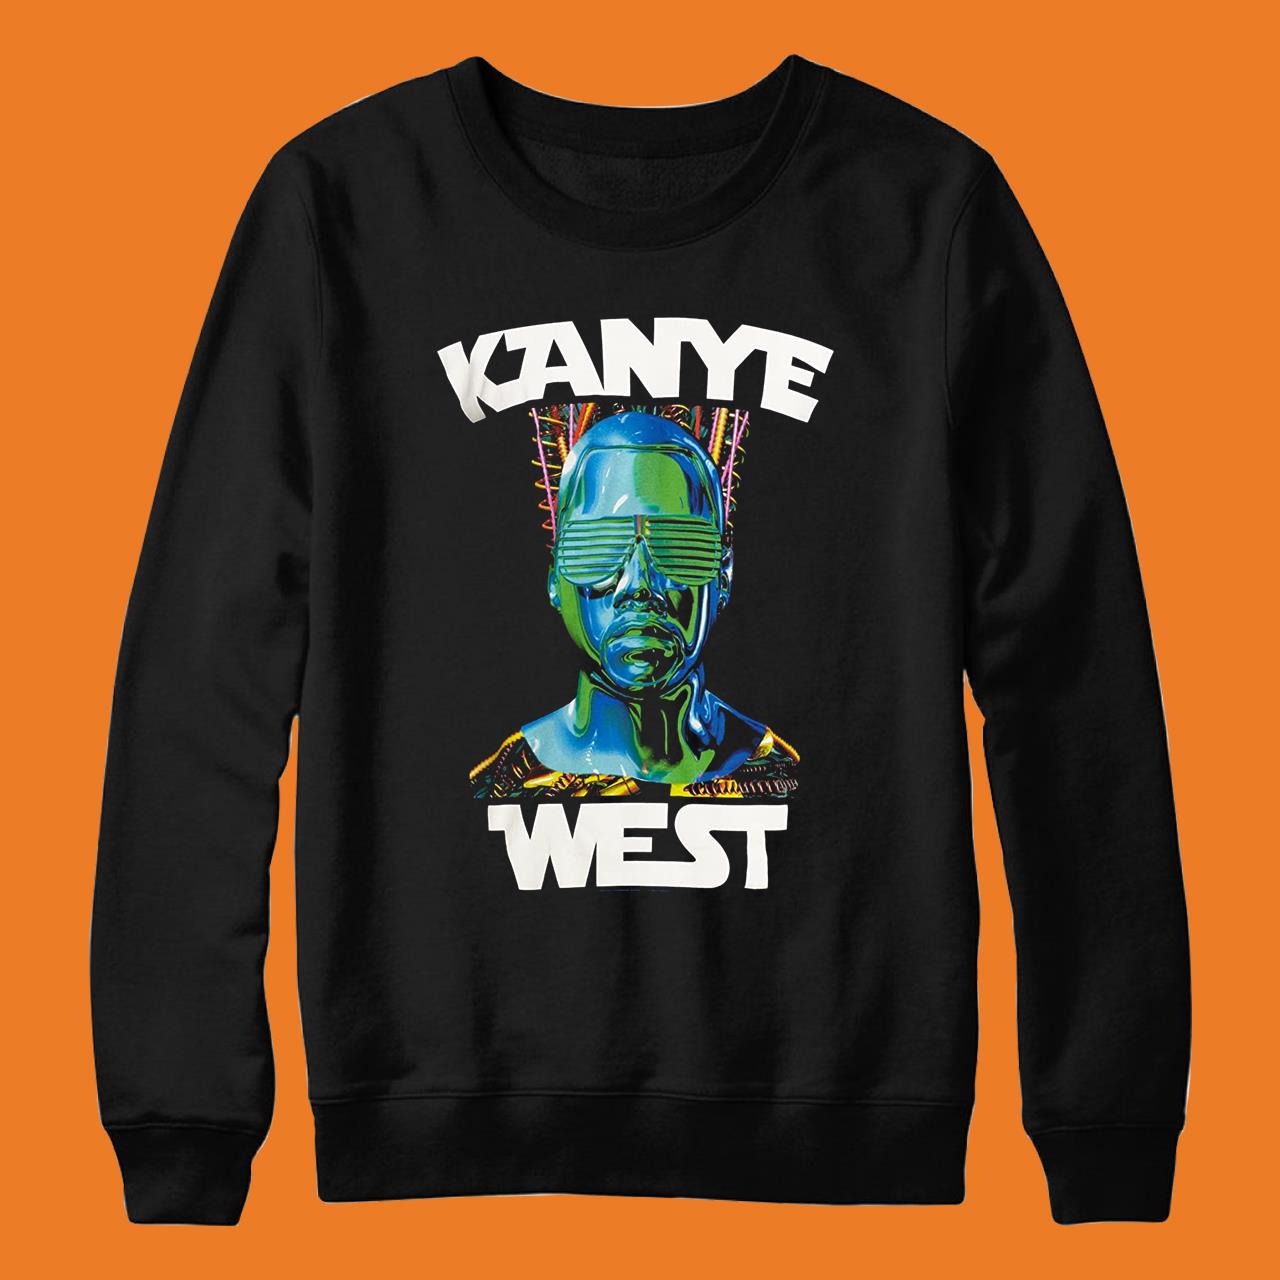 Bravado Men_s Kanye West Robot Wars T-Shirt